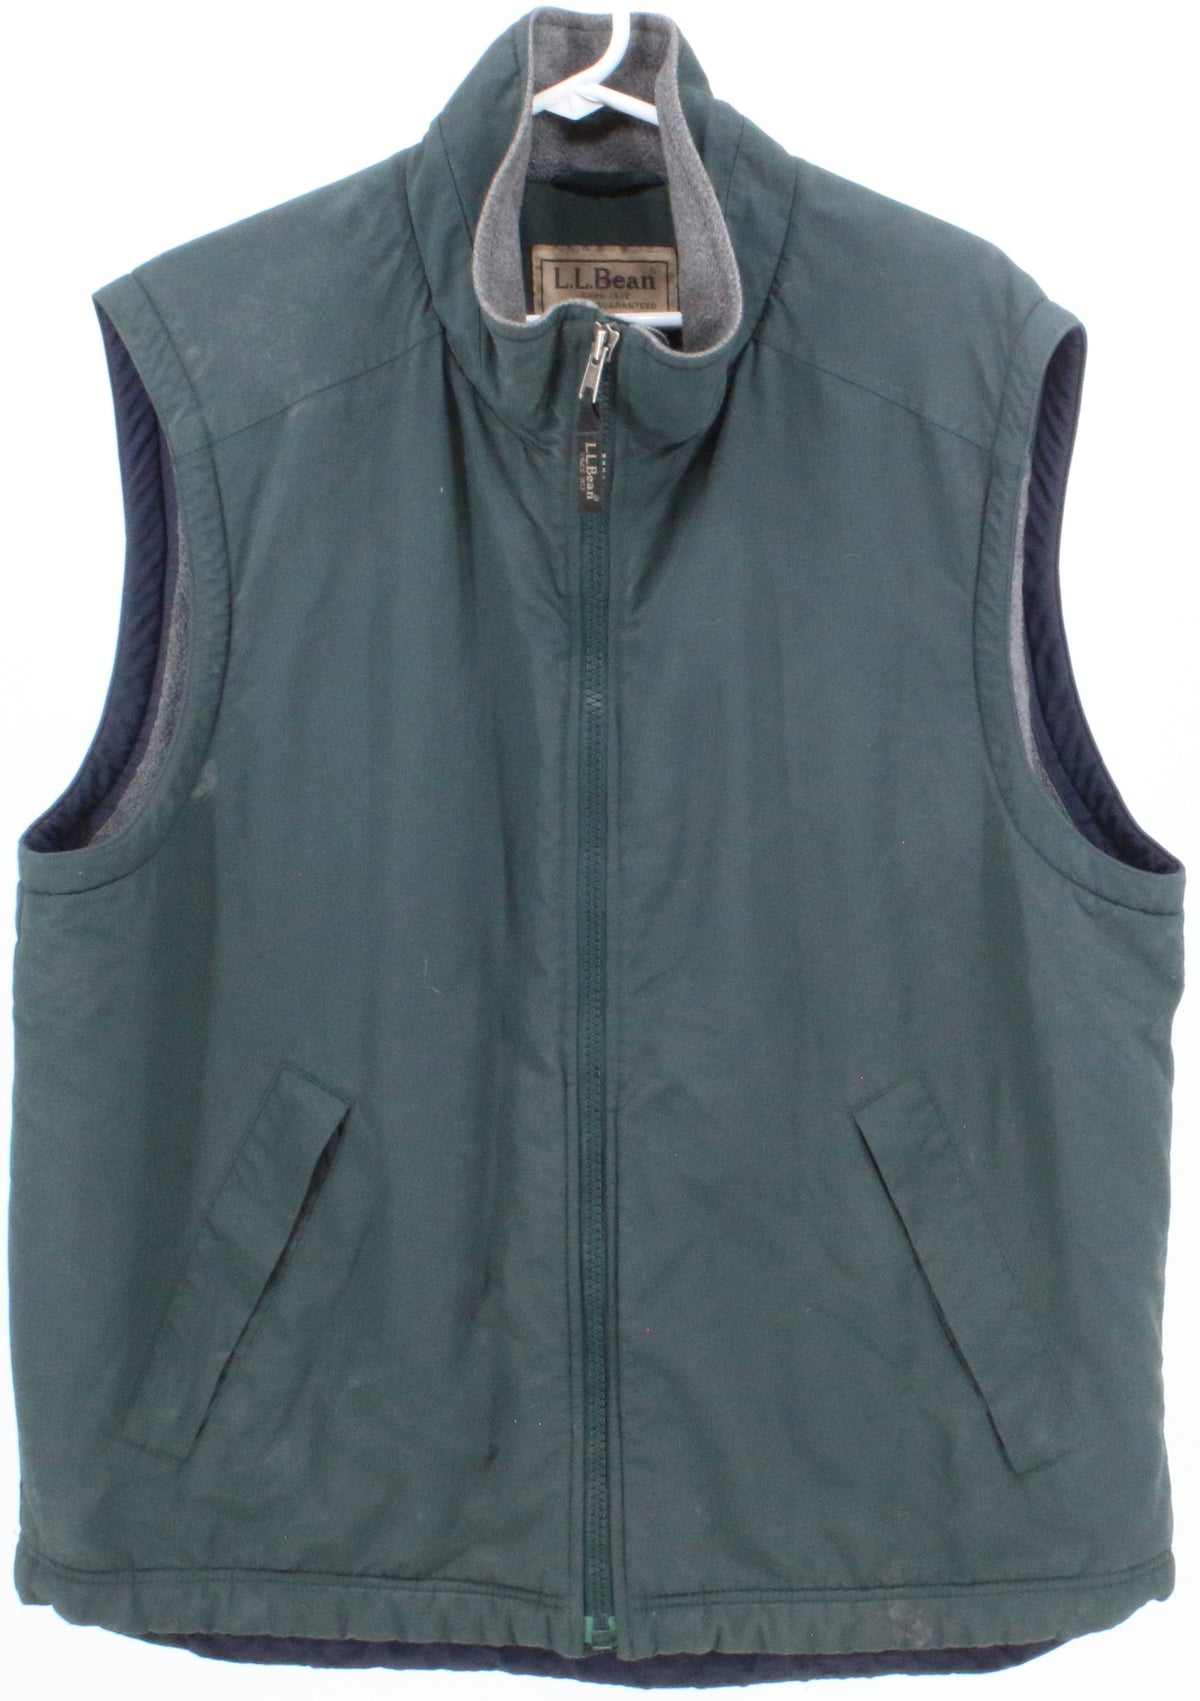 L.L.Bean Green Fleece Lined Vest